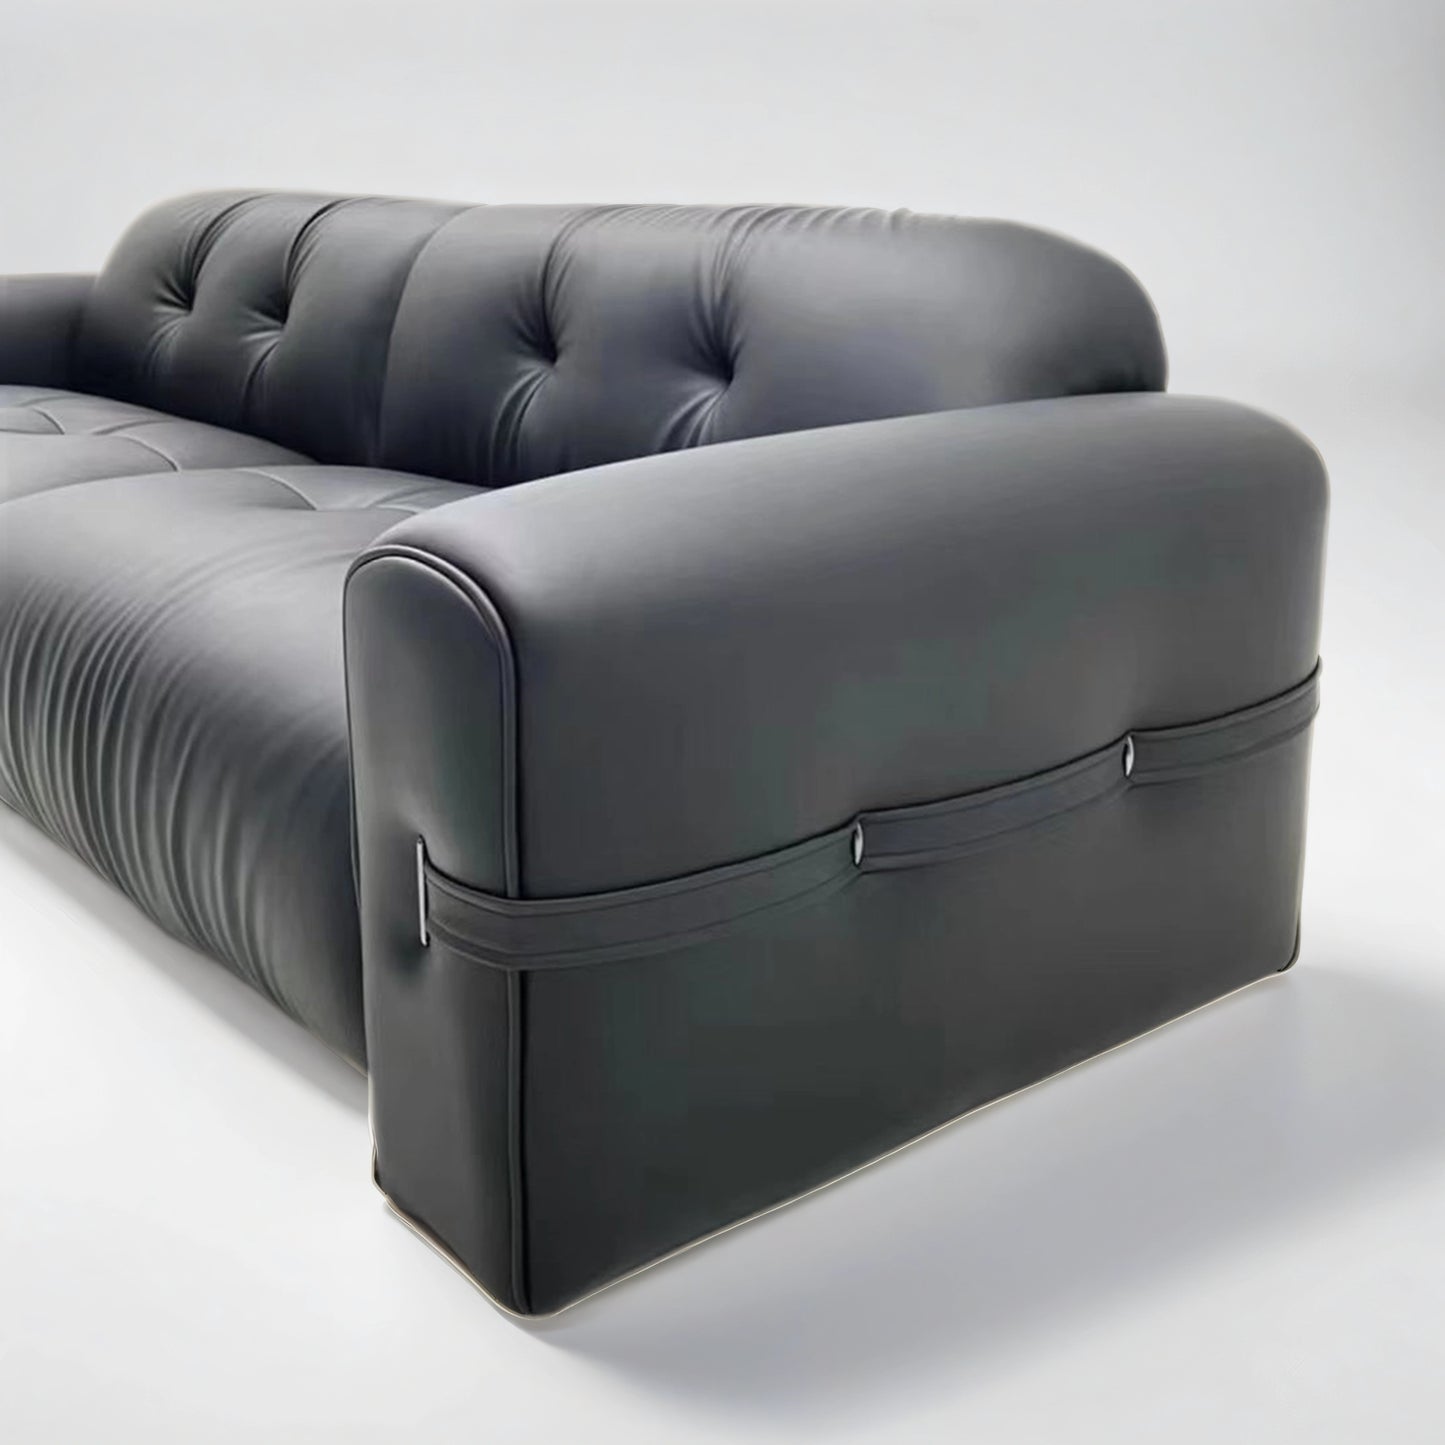 Italian-style light luxury genuine leather sofa